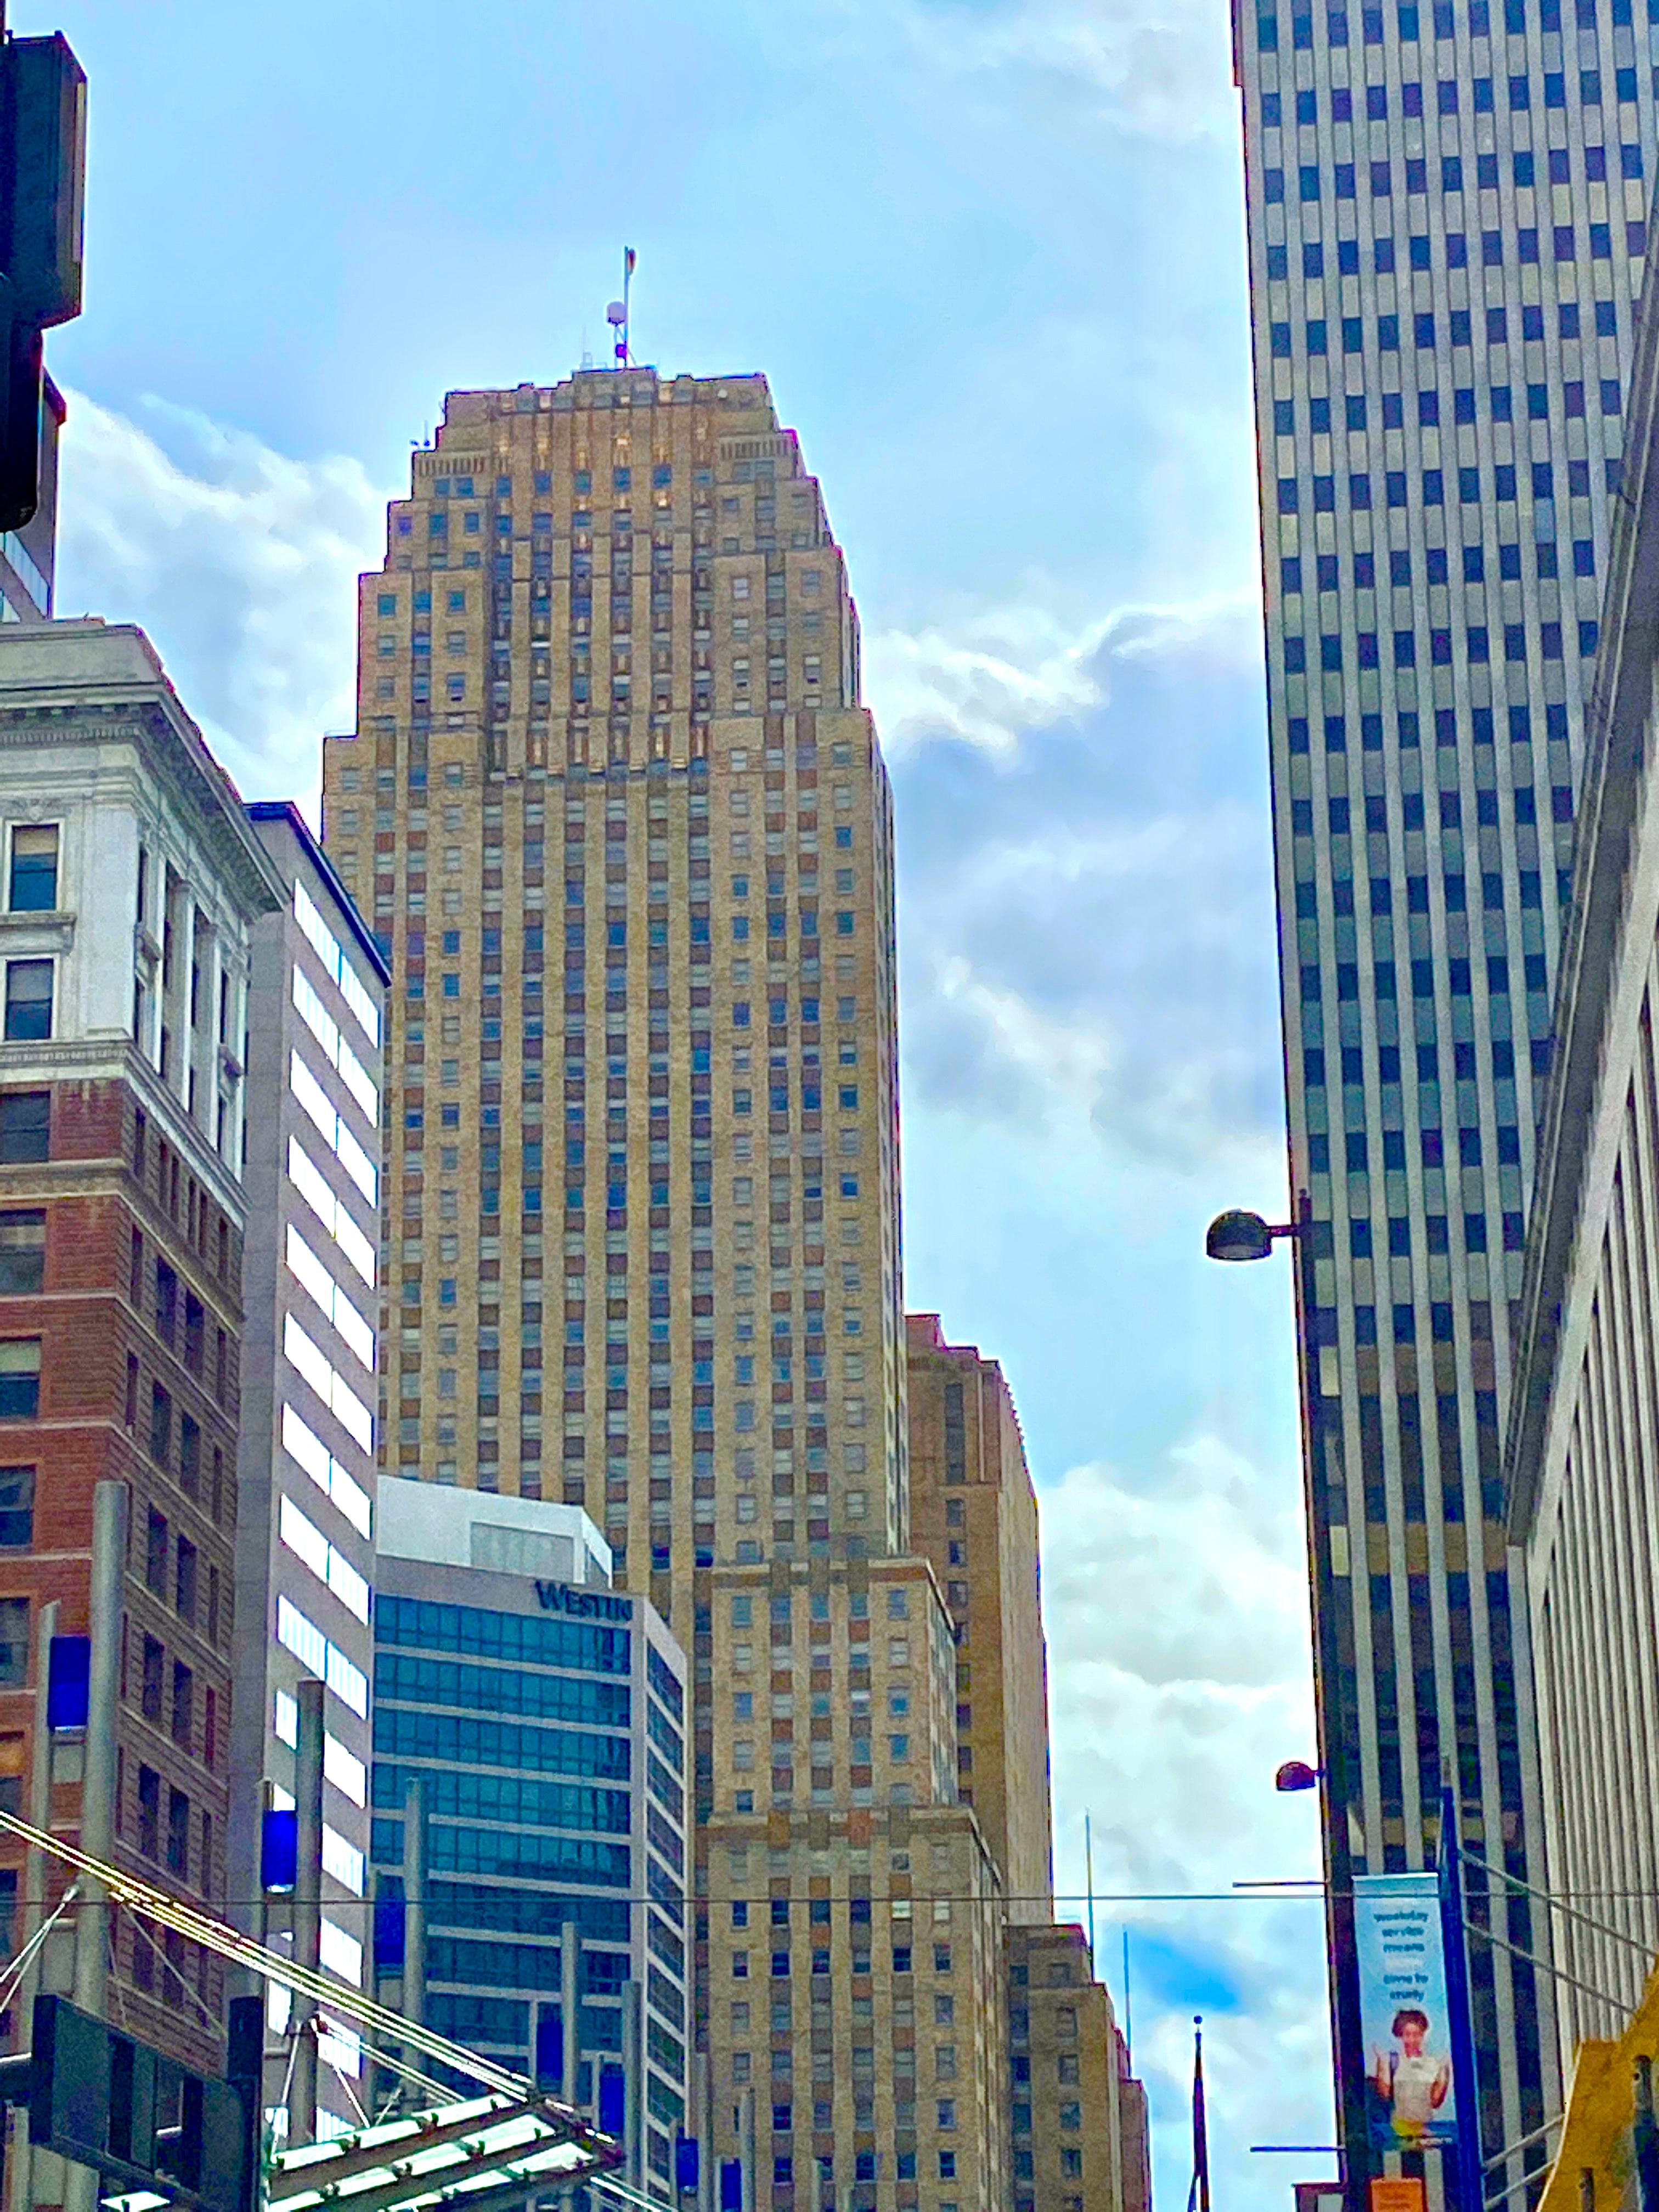 Street View of Carew tower in Cincinnati Ohio